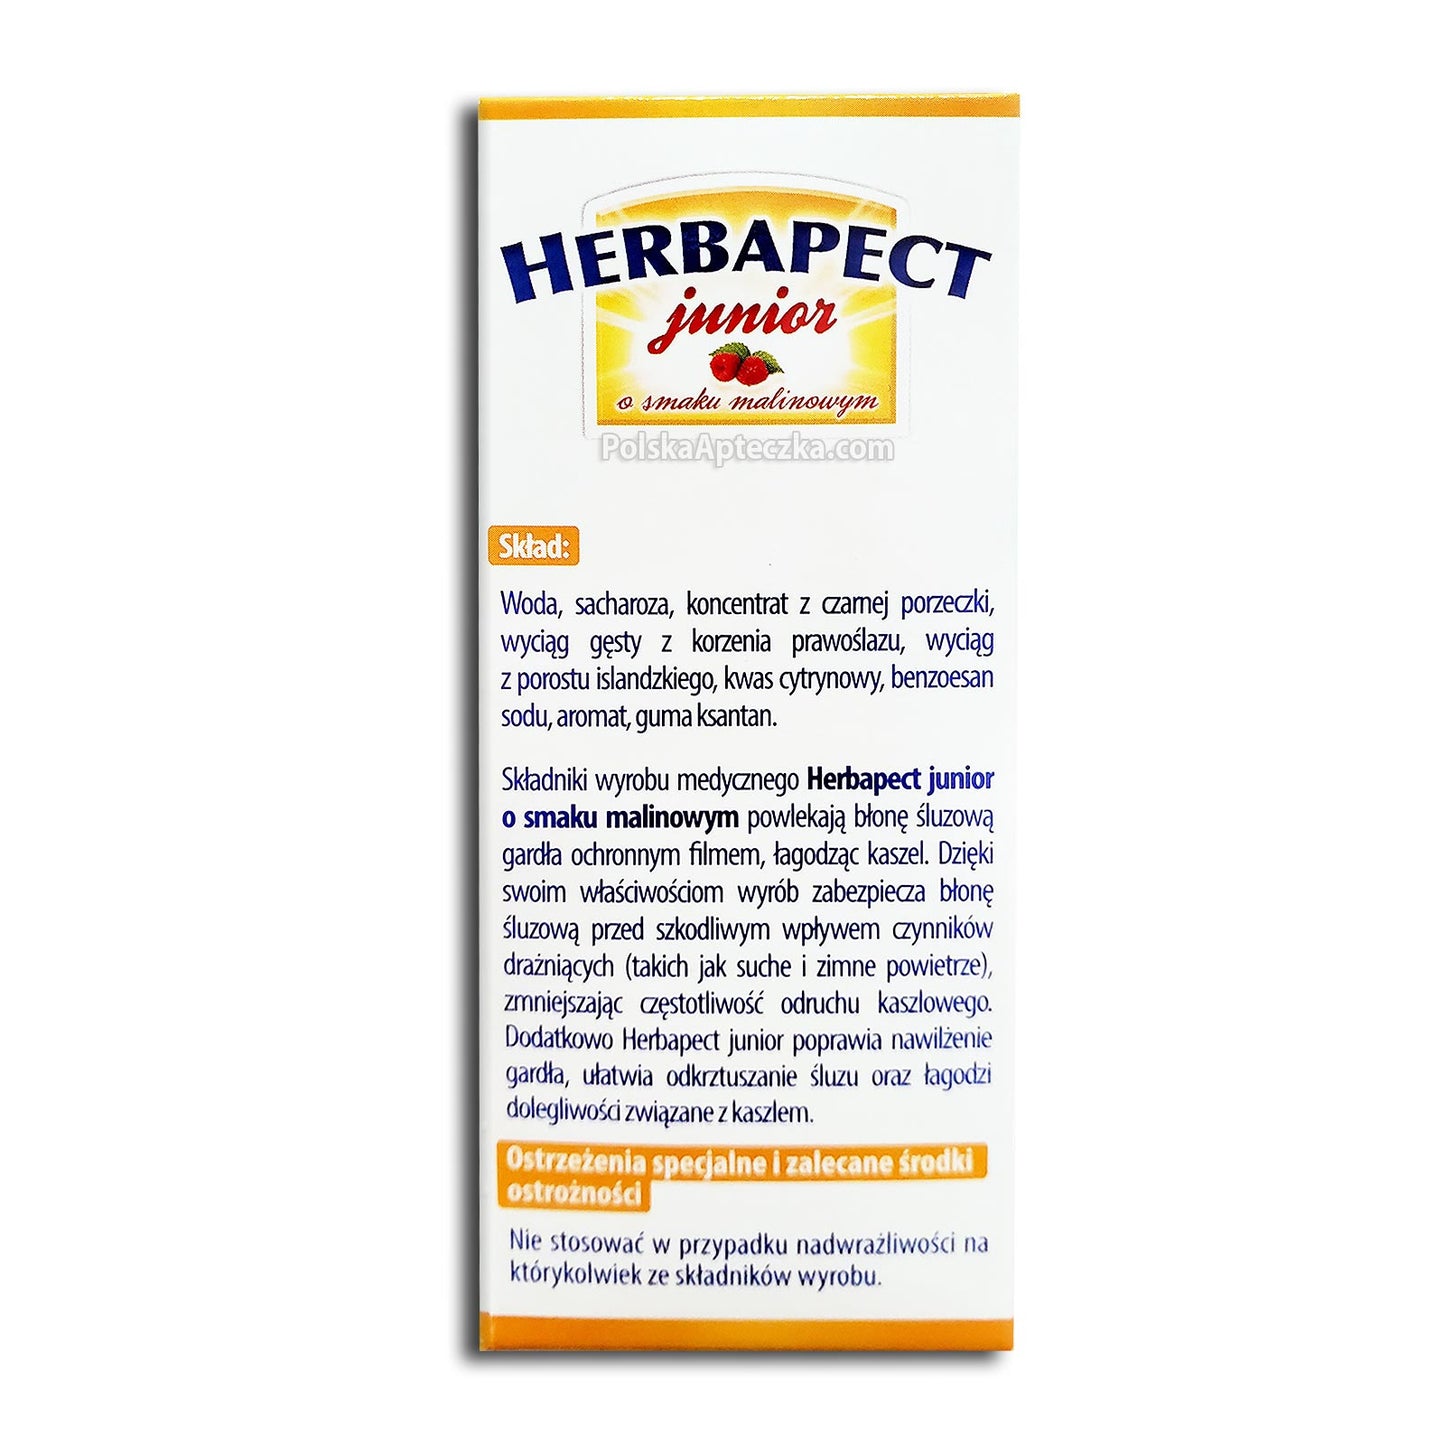 Herbapect Junior Syrup 120g, Aflofarm